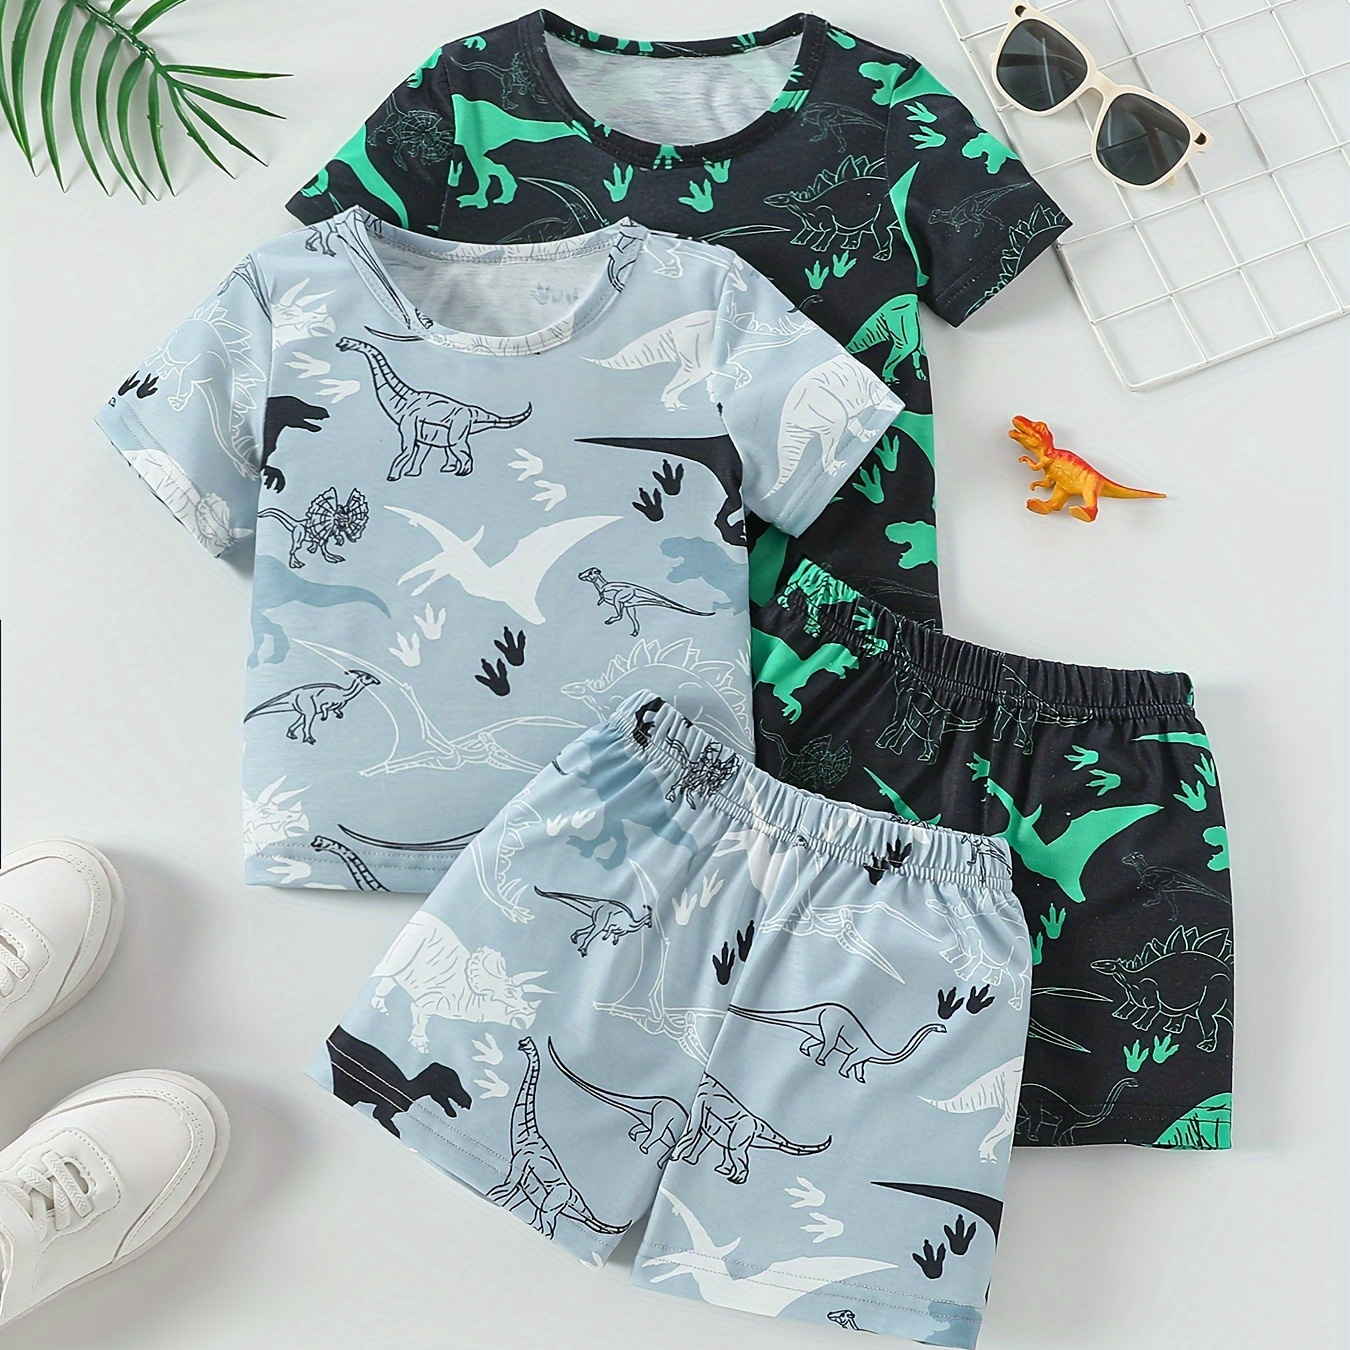 

2 Pcs Dinosaur Print Pajama Set For Boys, Including Short-sleeve Top And Shorts Children's Loungewear, Dinosaur Pattern